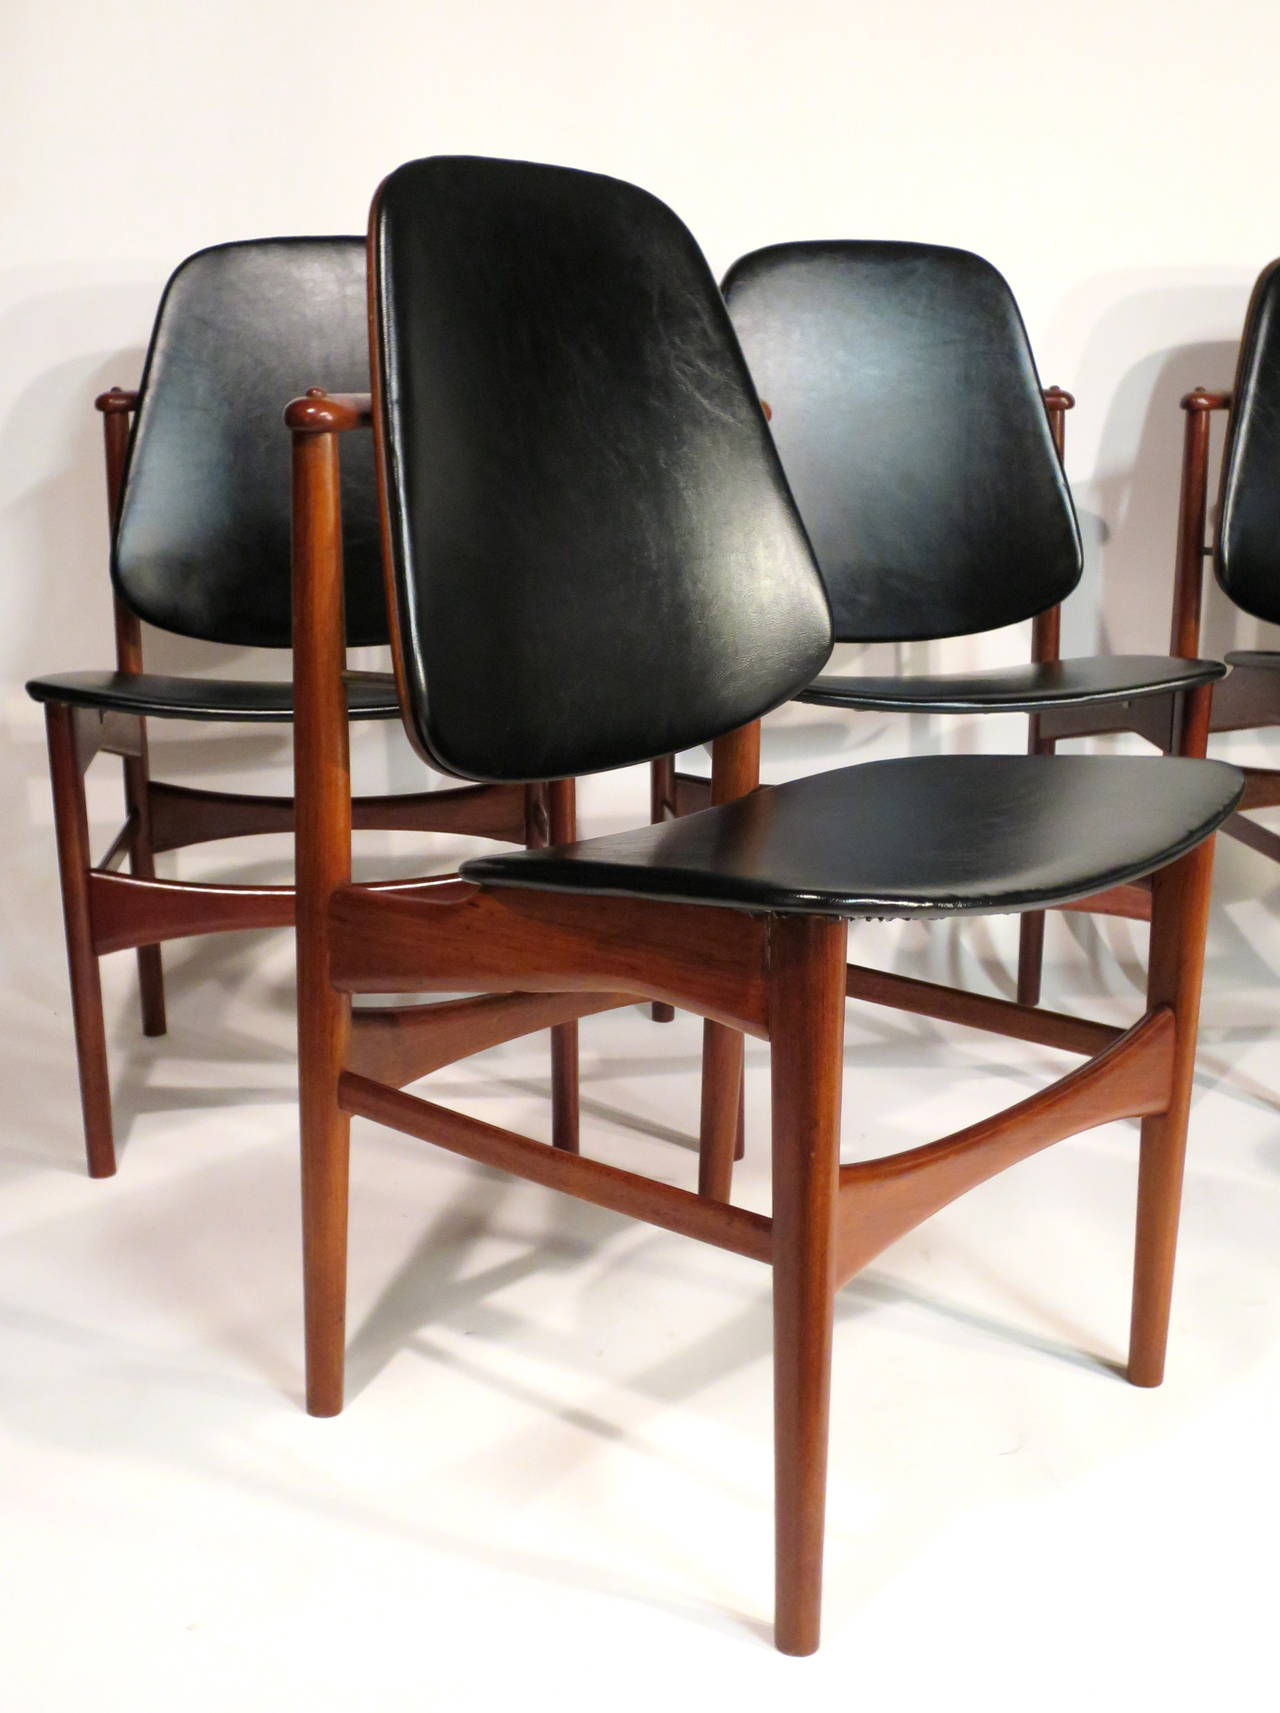 Scandinavian Modern Set of Six Danish Modern Chairs by Arne Hovmand-Olsen